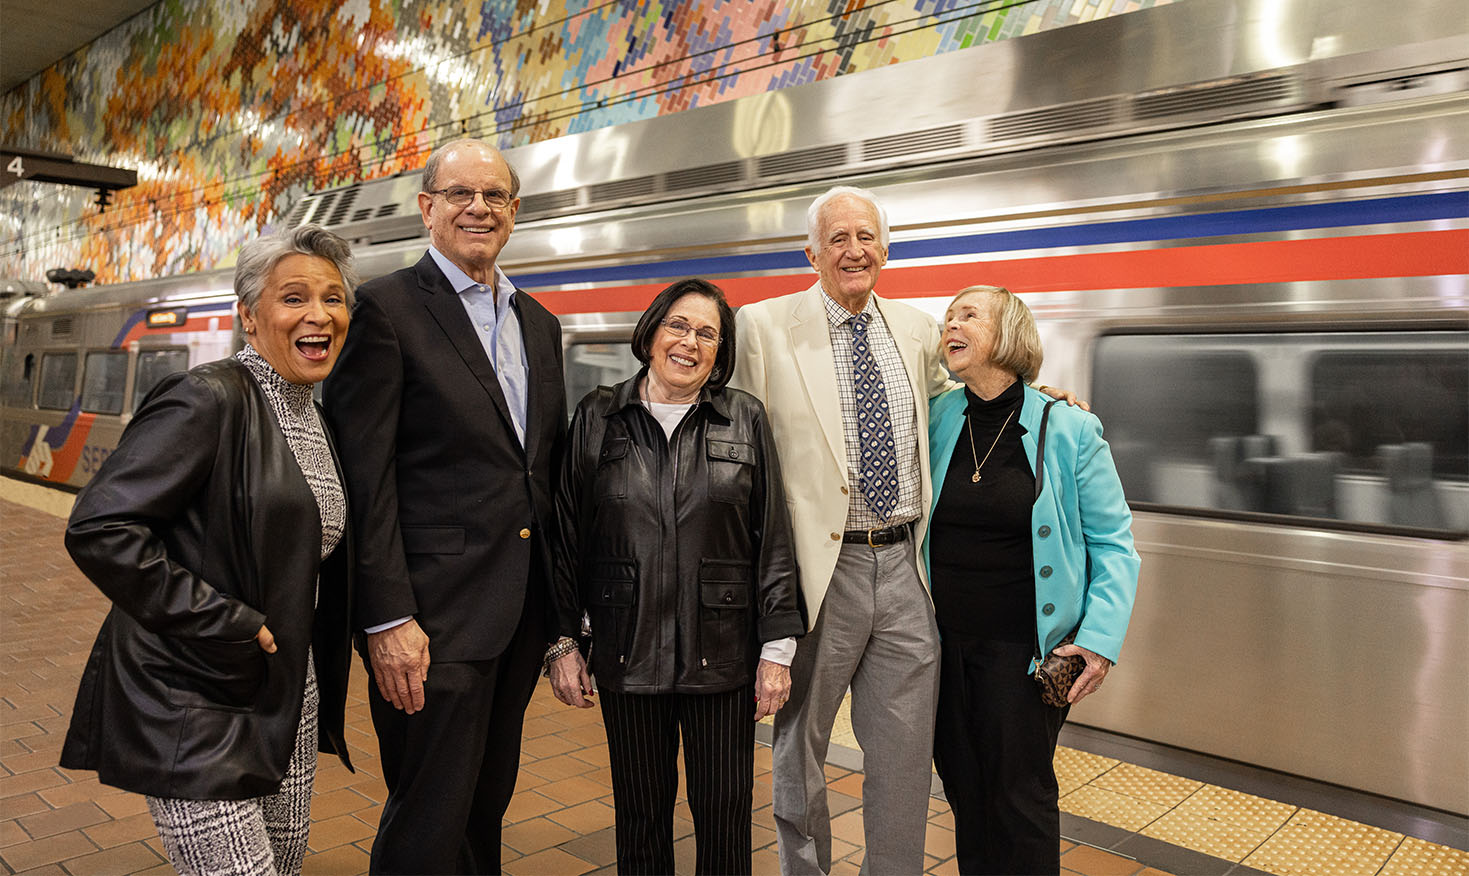 Five seniors at a train station